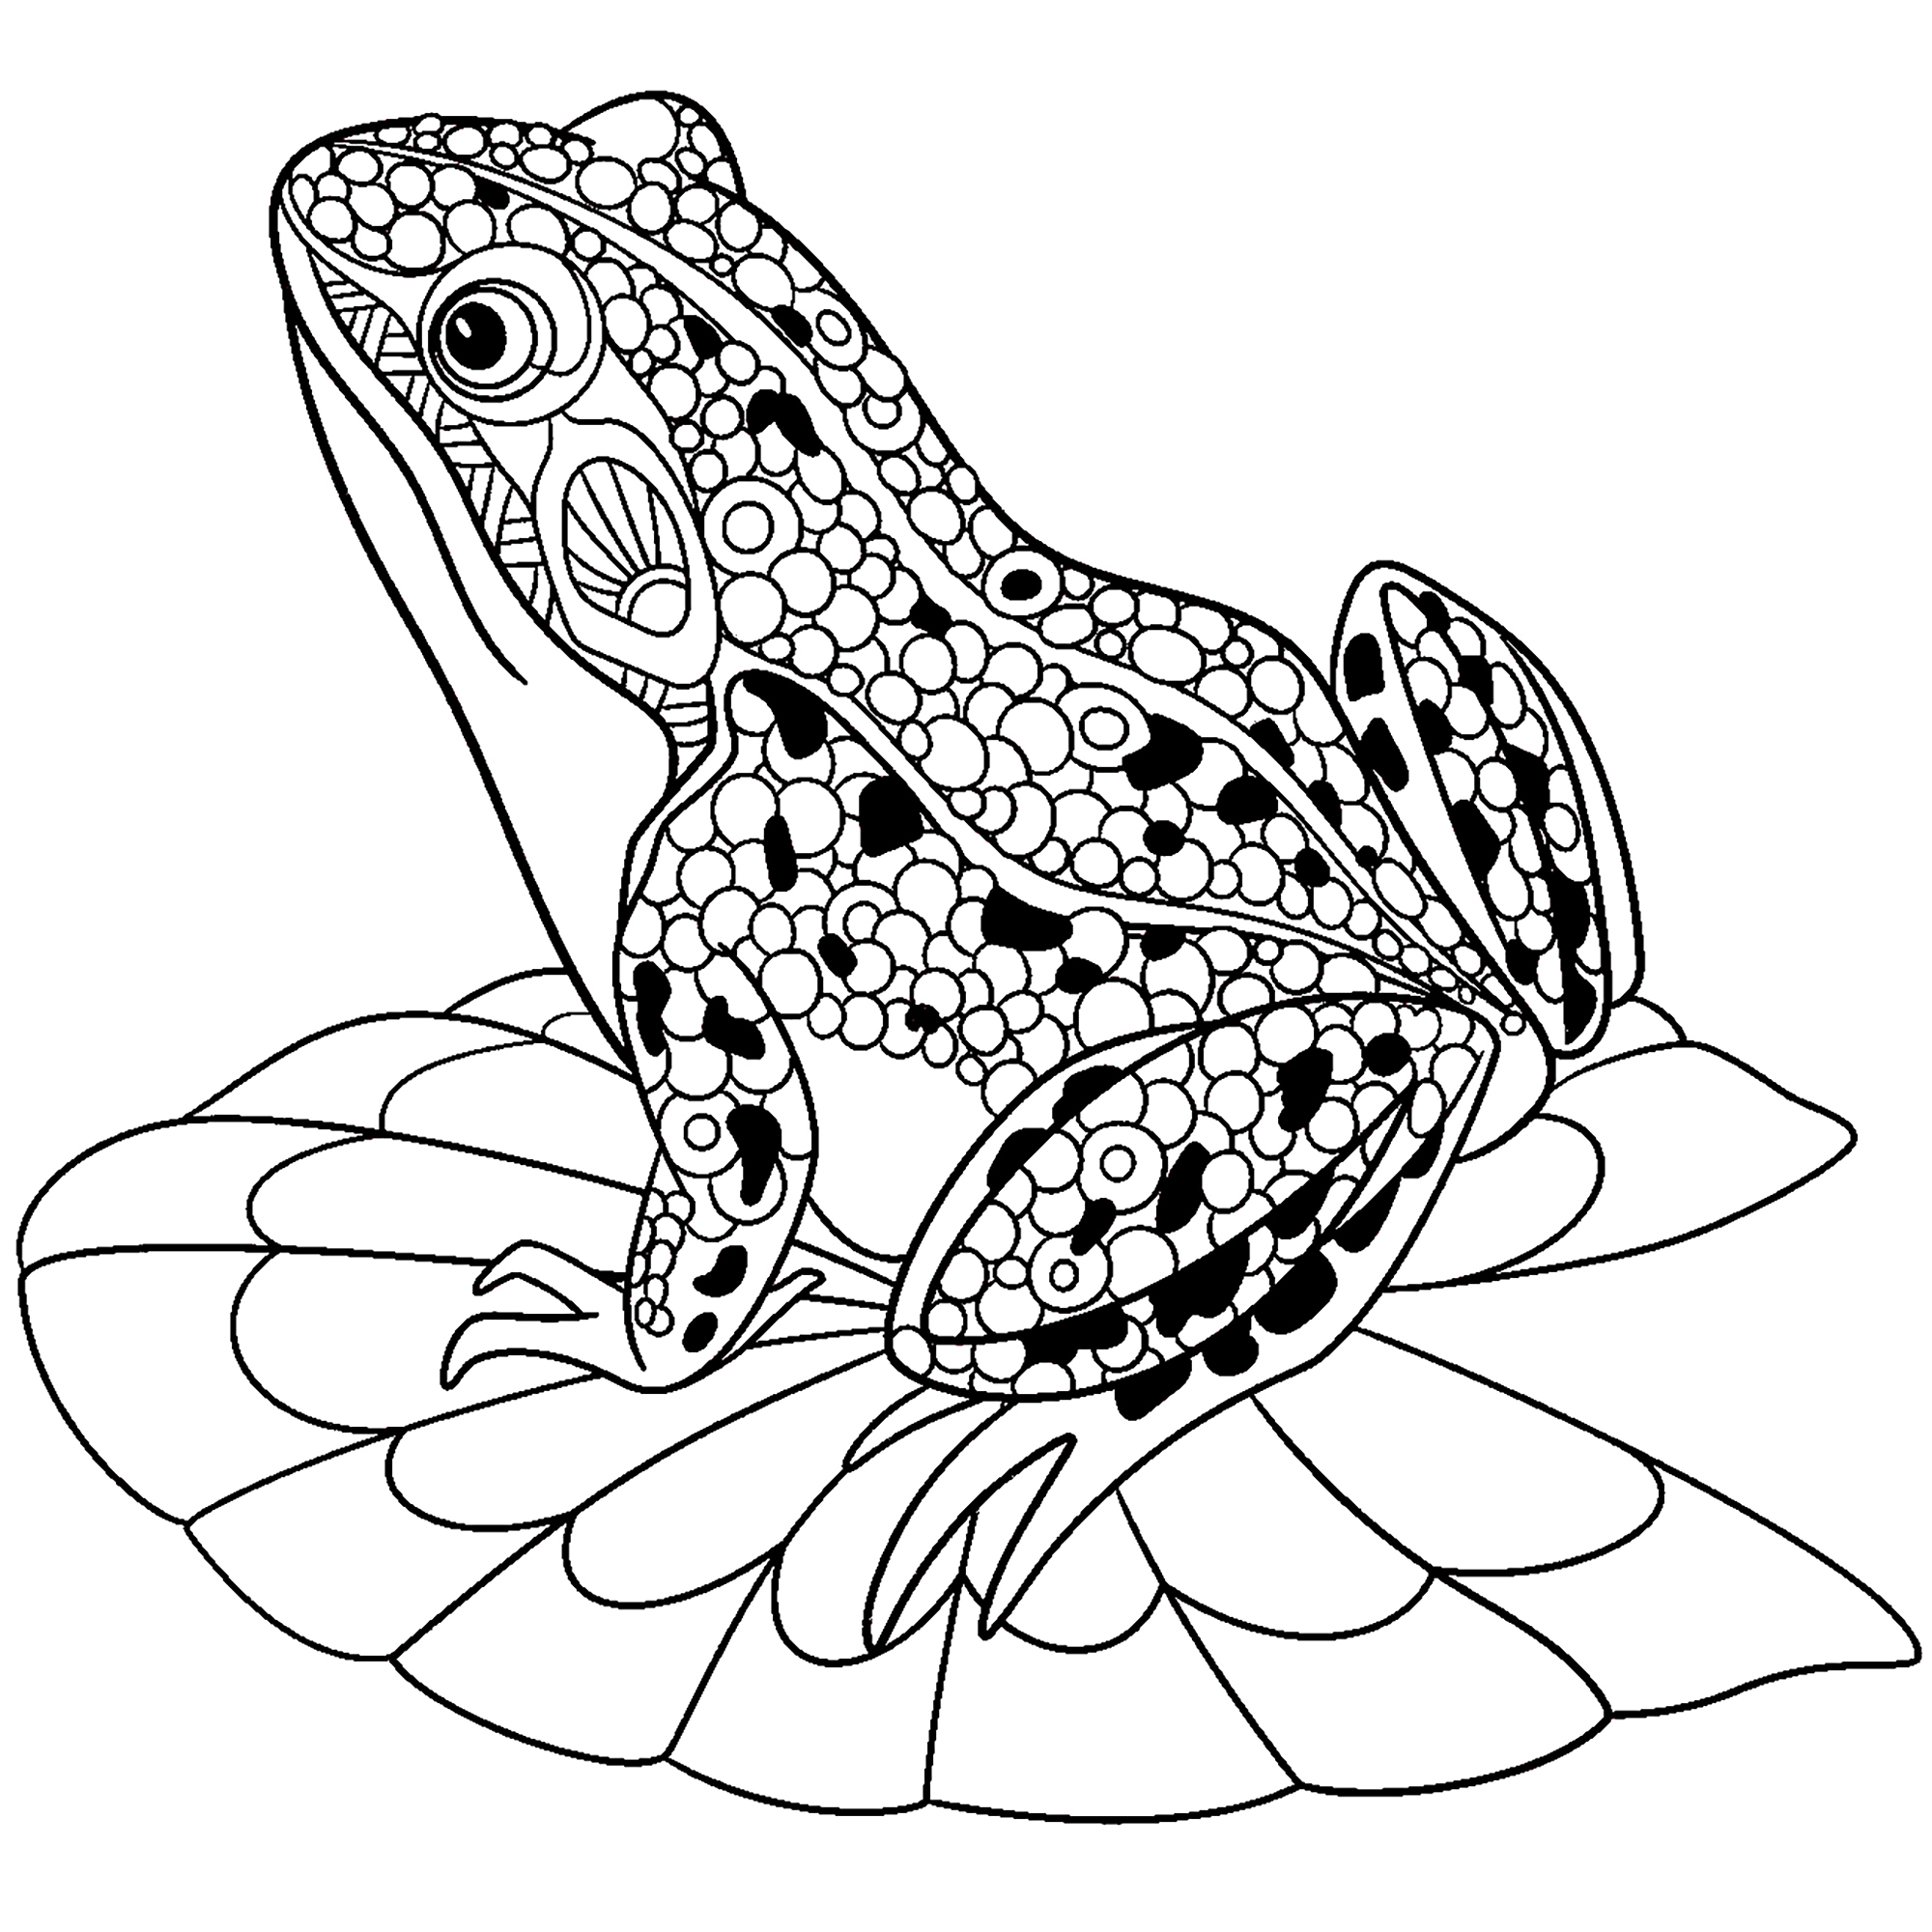 Zentangle Stylized Frog - Coloriage De Grenouilles concernant Grenouille Dessin